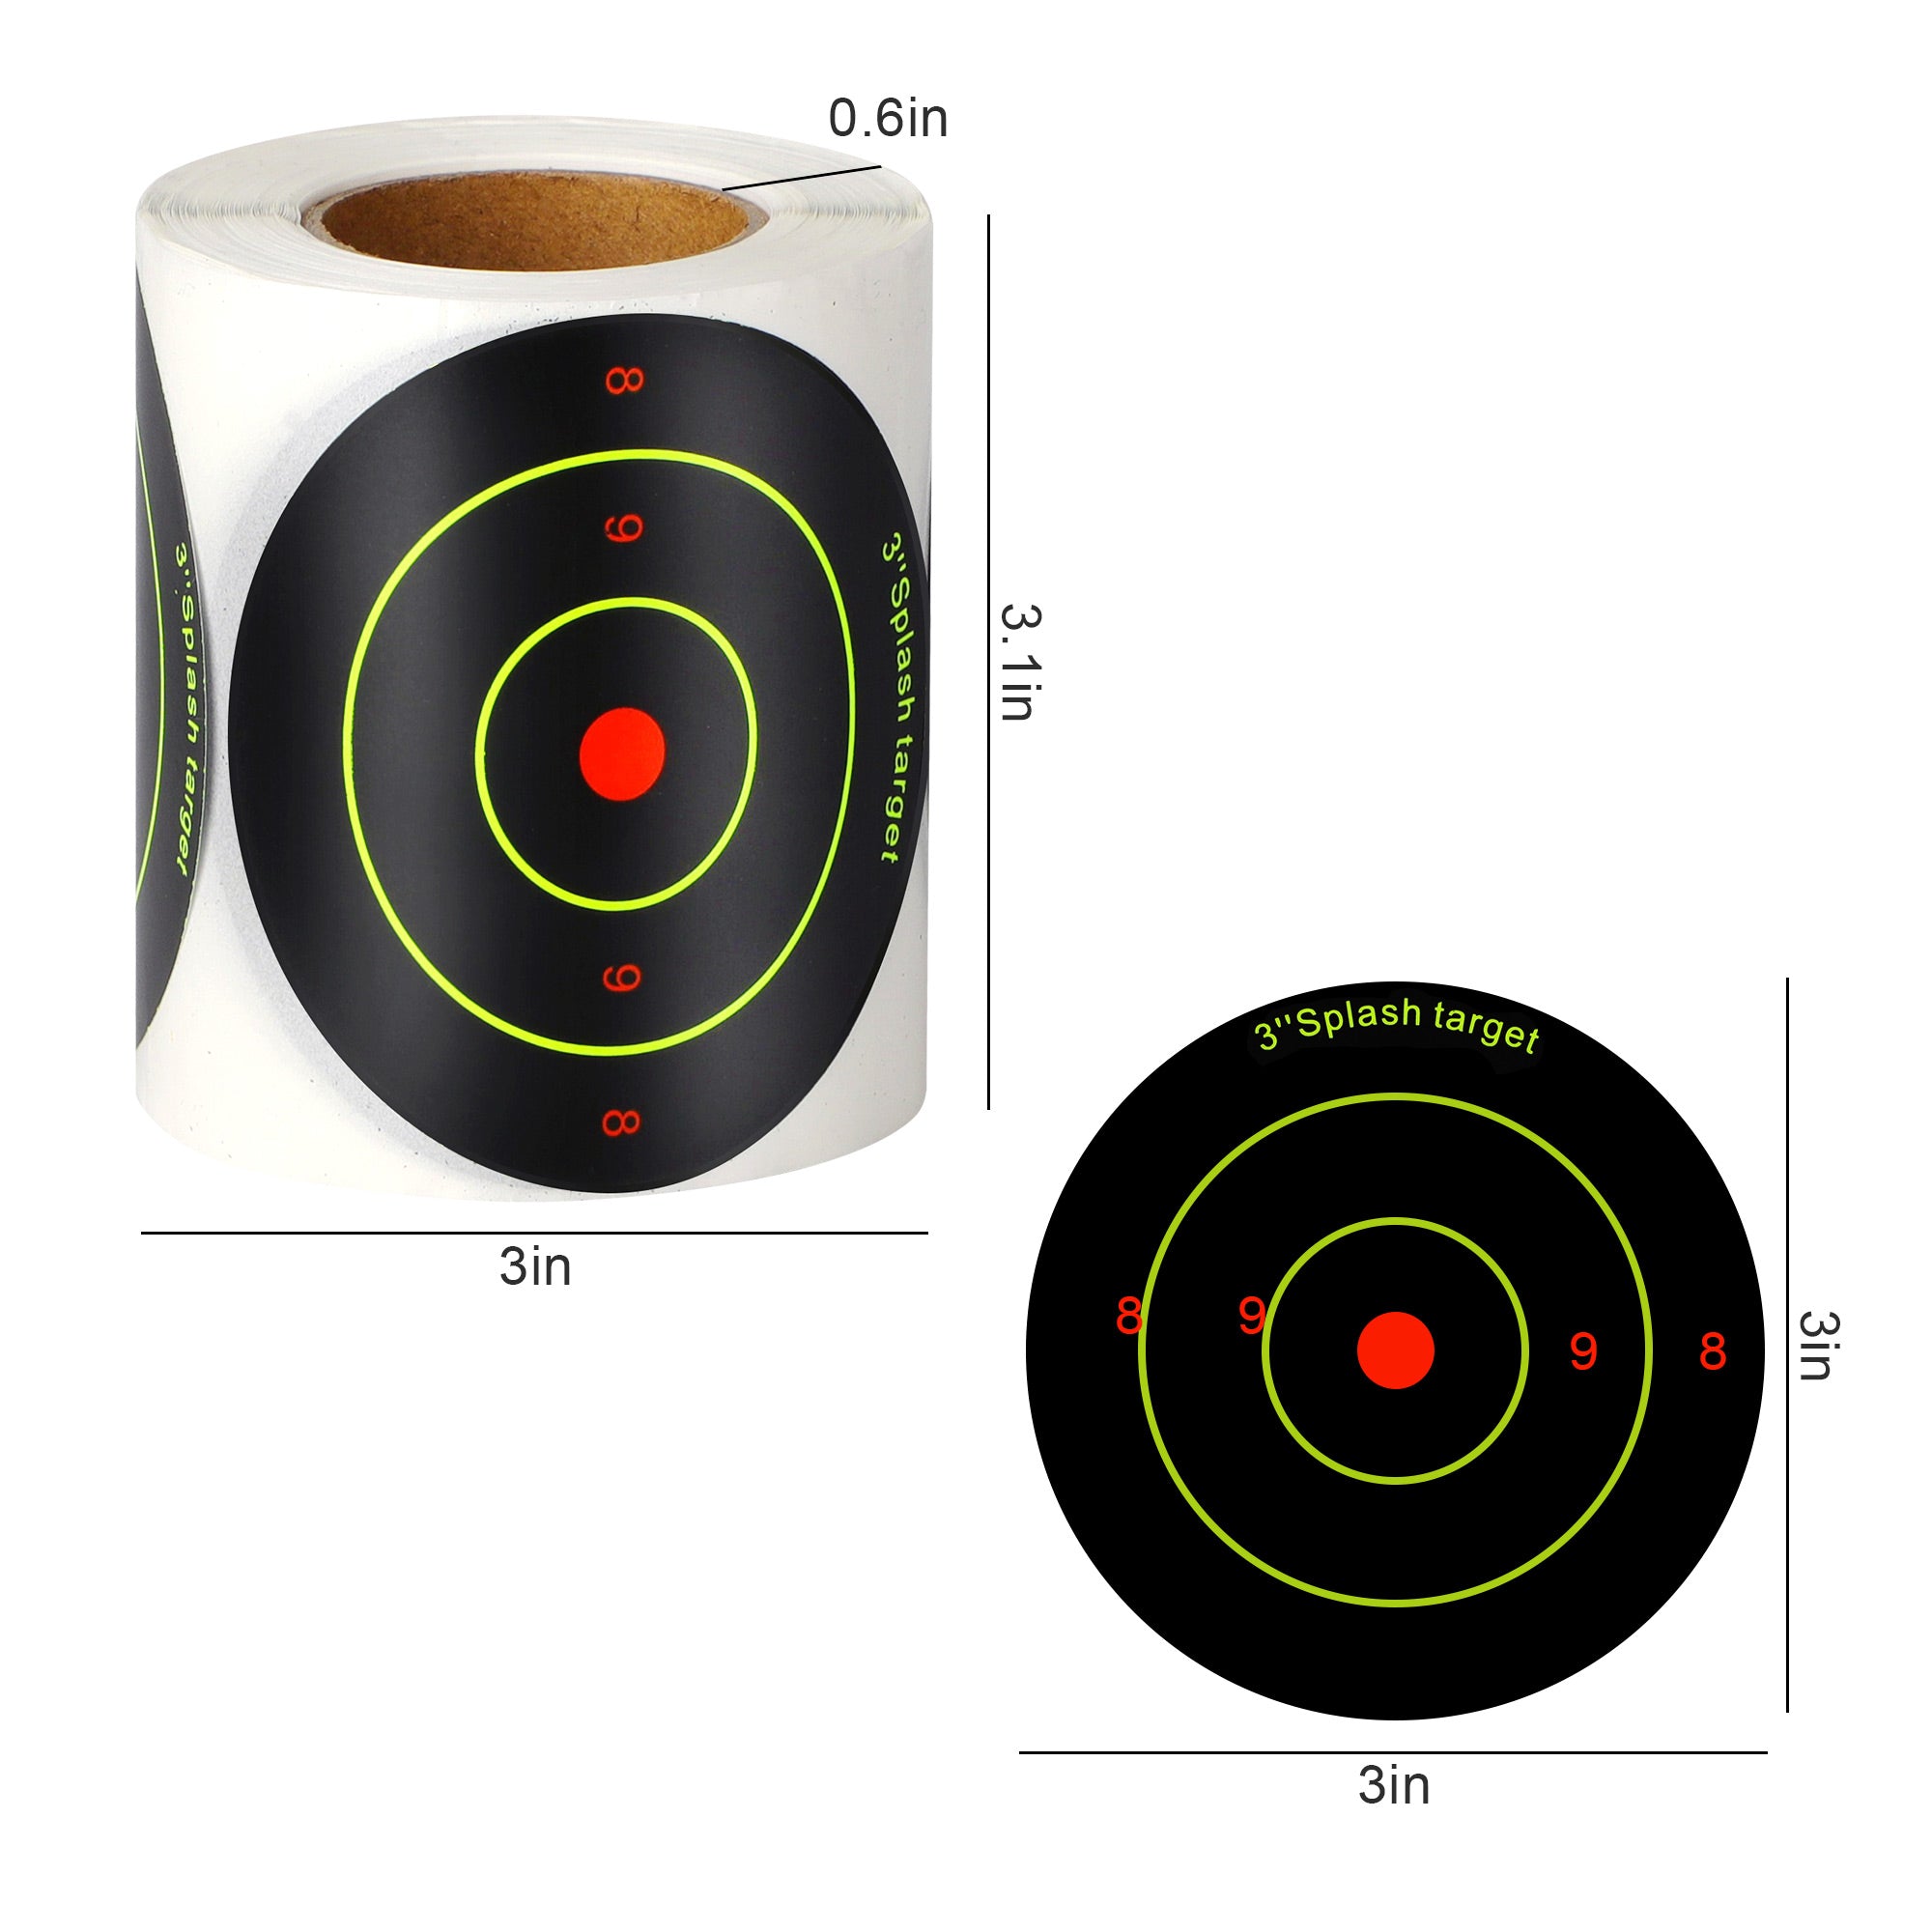 200 Pcs Self-Adhesive Shooting Targets Stickers - 3